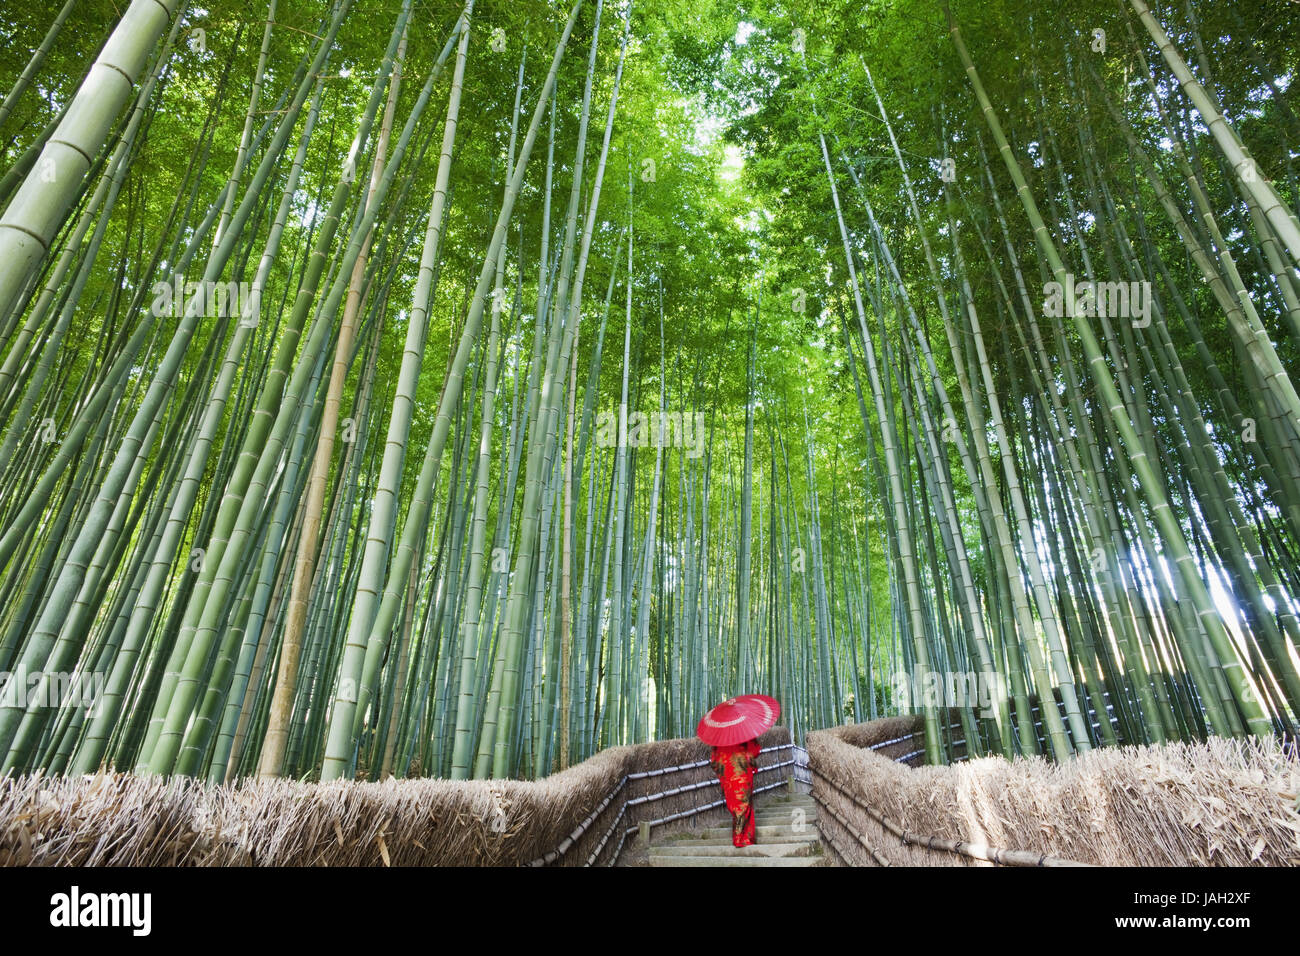 Japon Kyoto Arashiyama,,,Adashino Nenbutsu-ji,bois de bambou,way,escaliers,femme,kimono,écran affichage,vue arrière, Banque D'Images